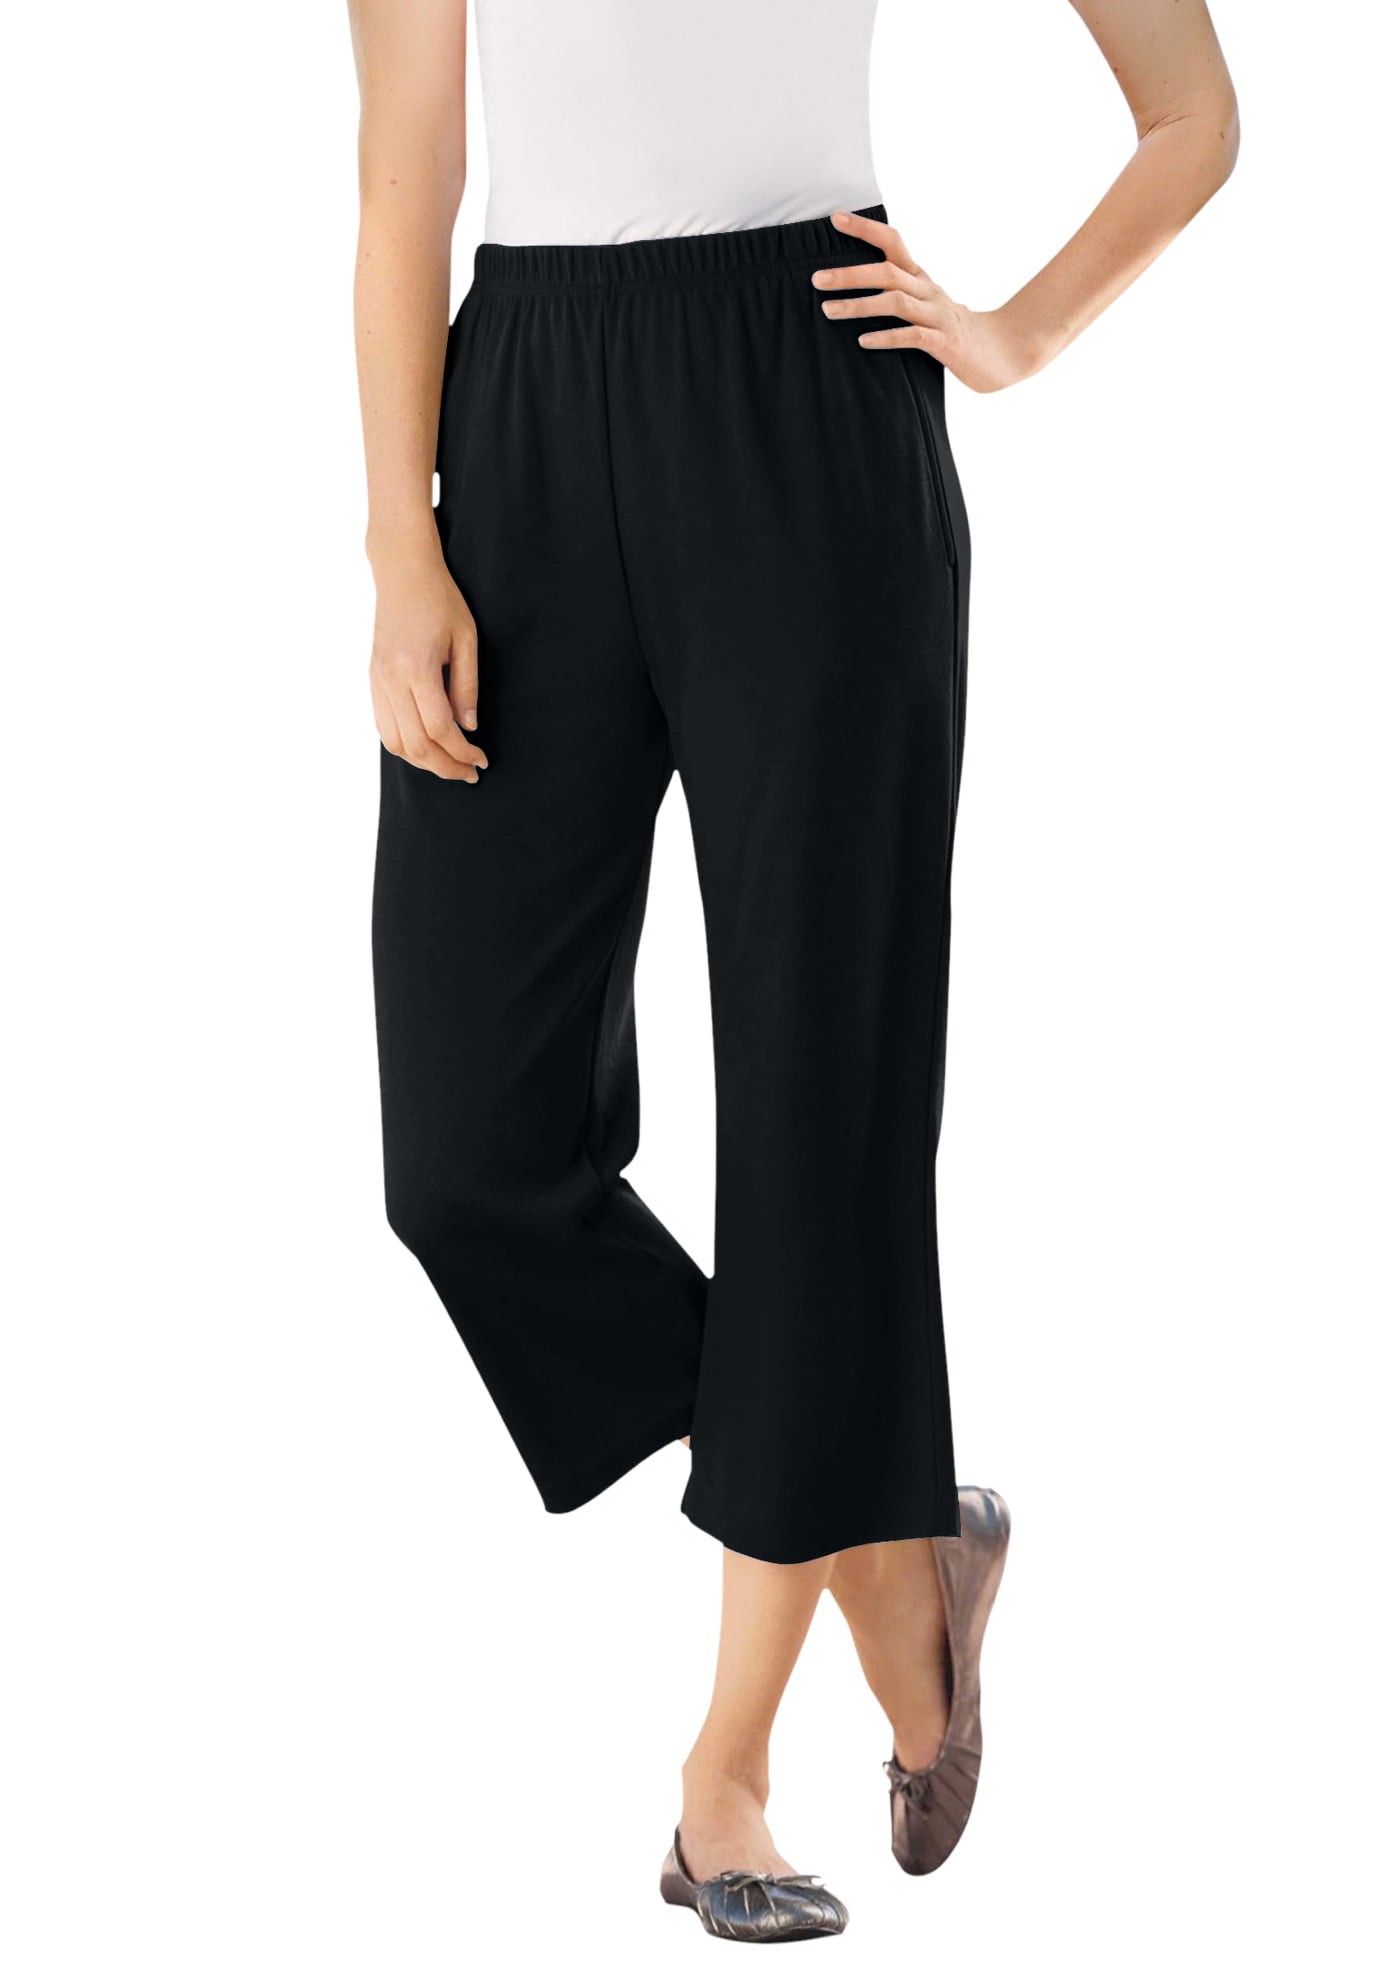 Talje Walter Cunningham plasticitet Woman Within Women's Plus Size Petite 7-Day Knit Capri Pants - M, Black -  Walmart.com